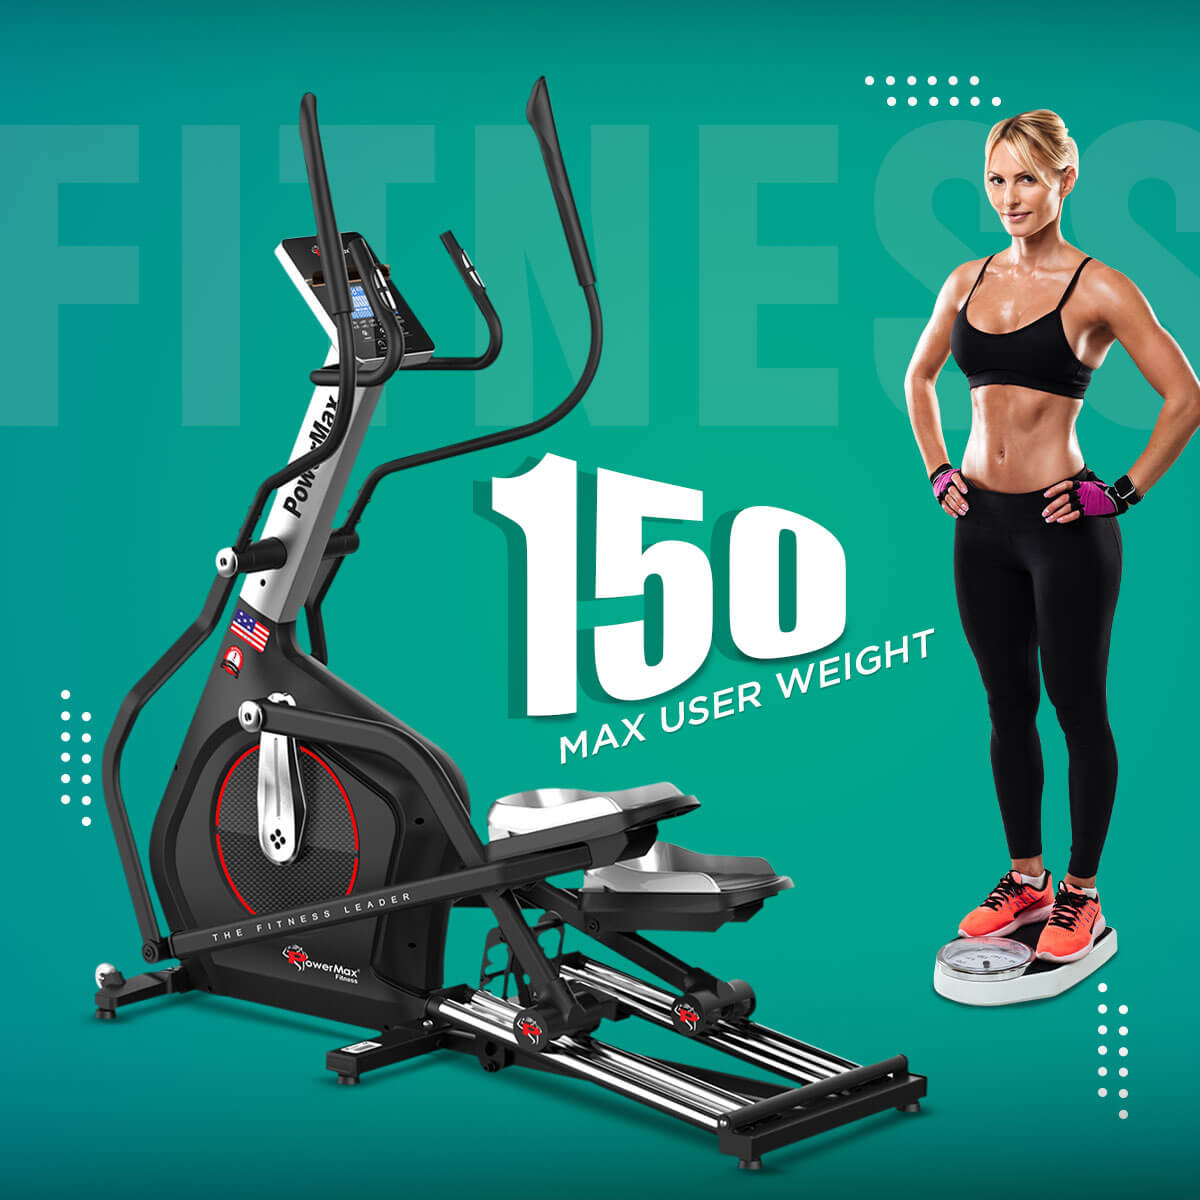 buy powermax ec-1800 commercial elliptical trainer with adjustable stride length